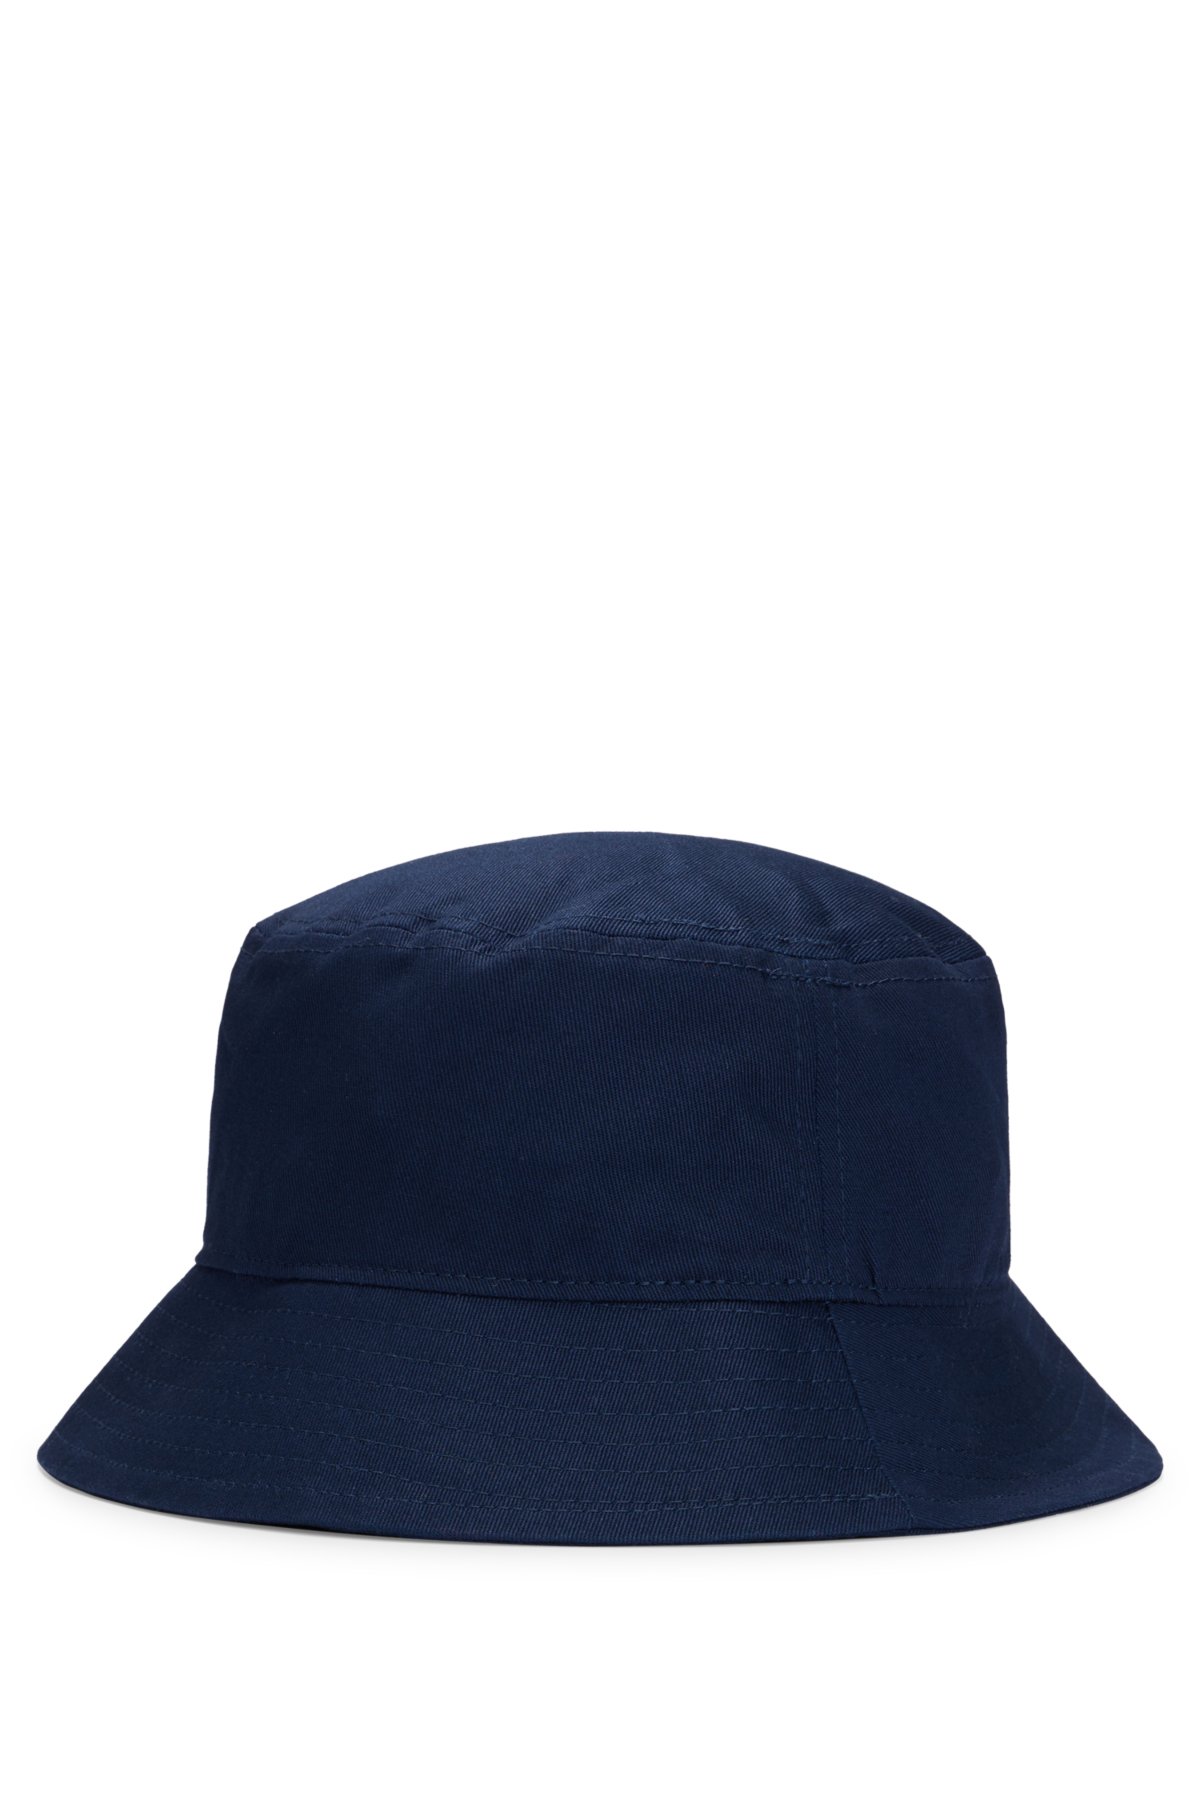 BOSS - Kids' bucket hat in cotton twill with logo print